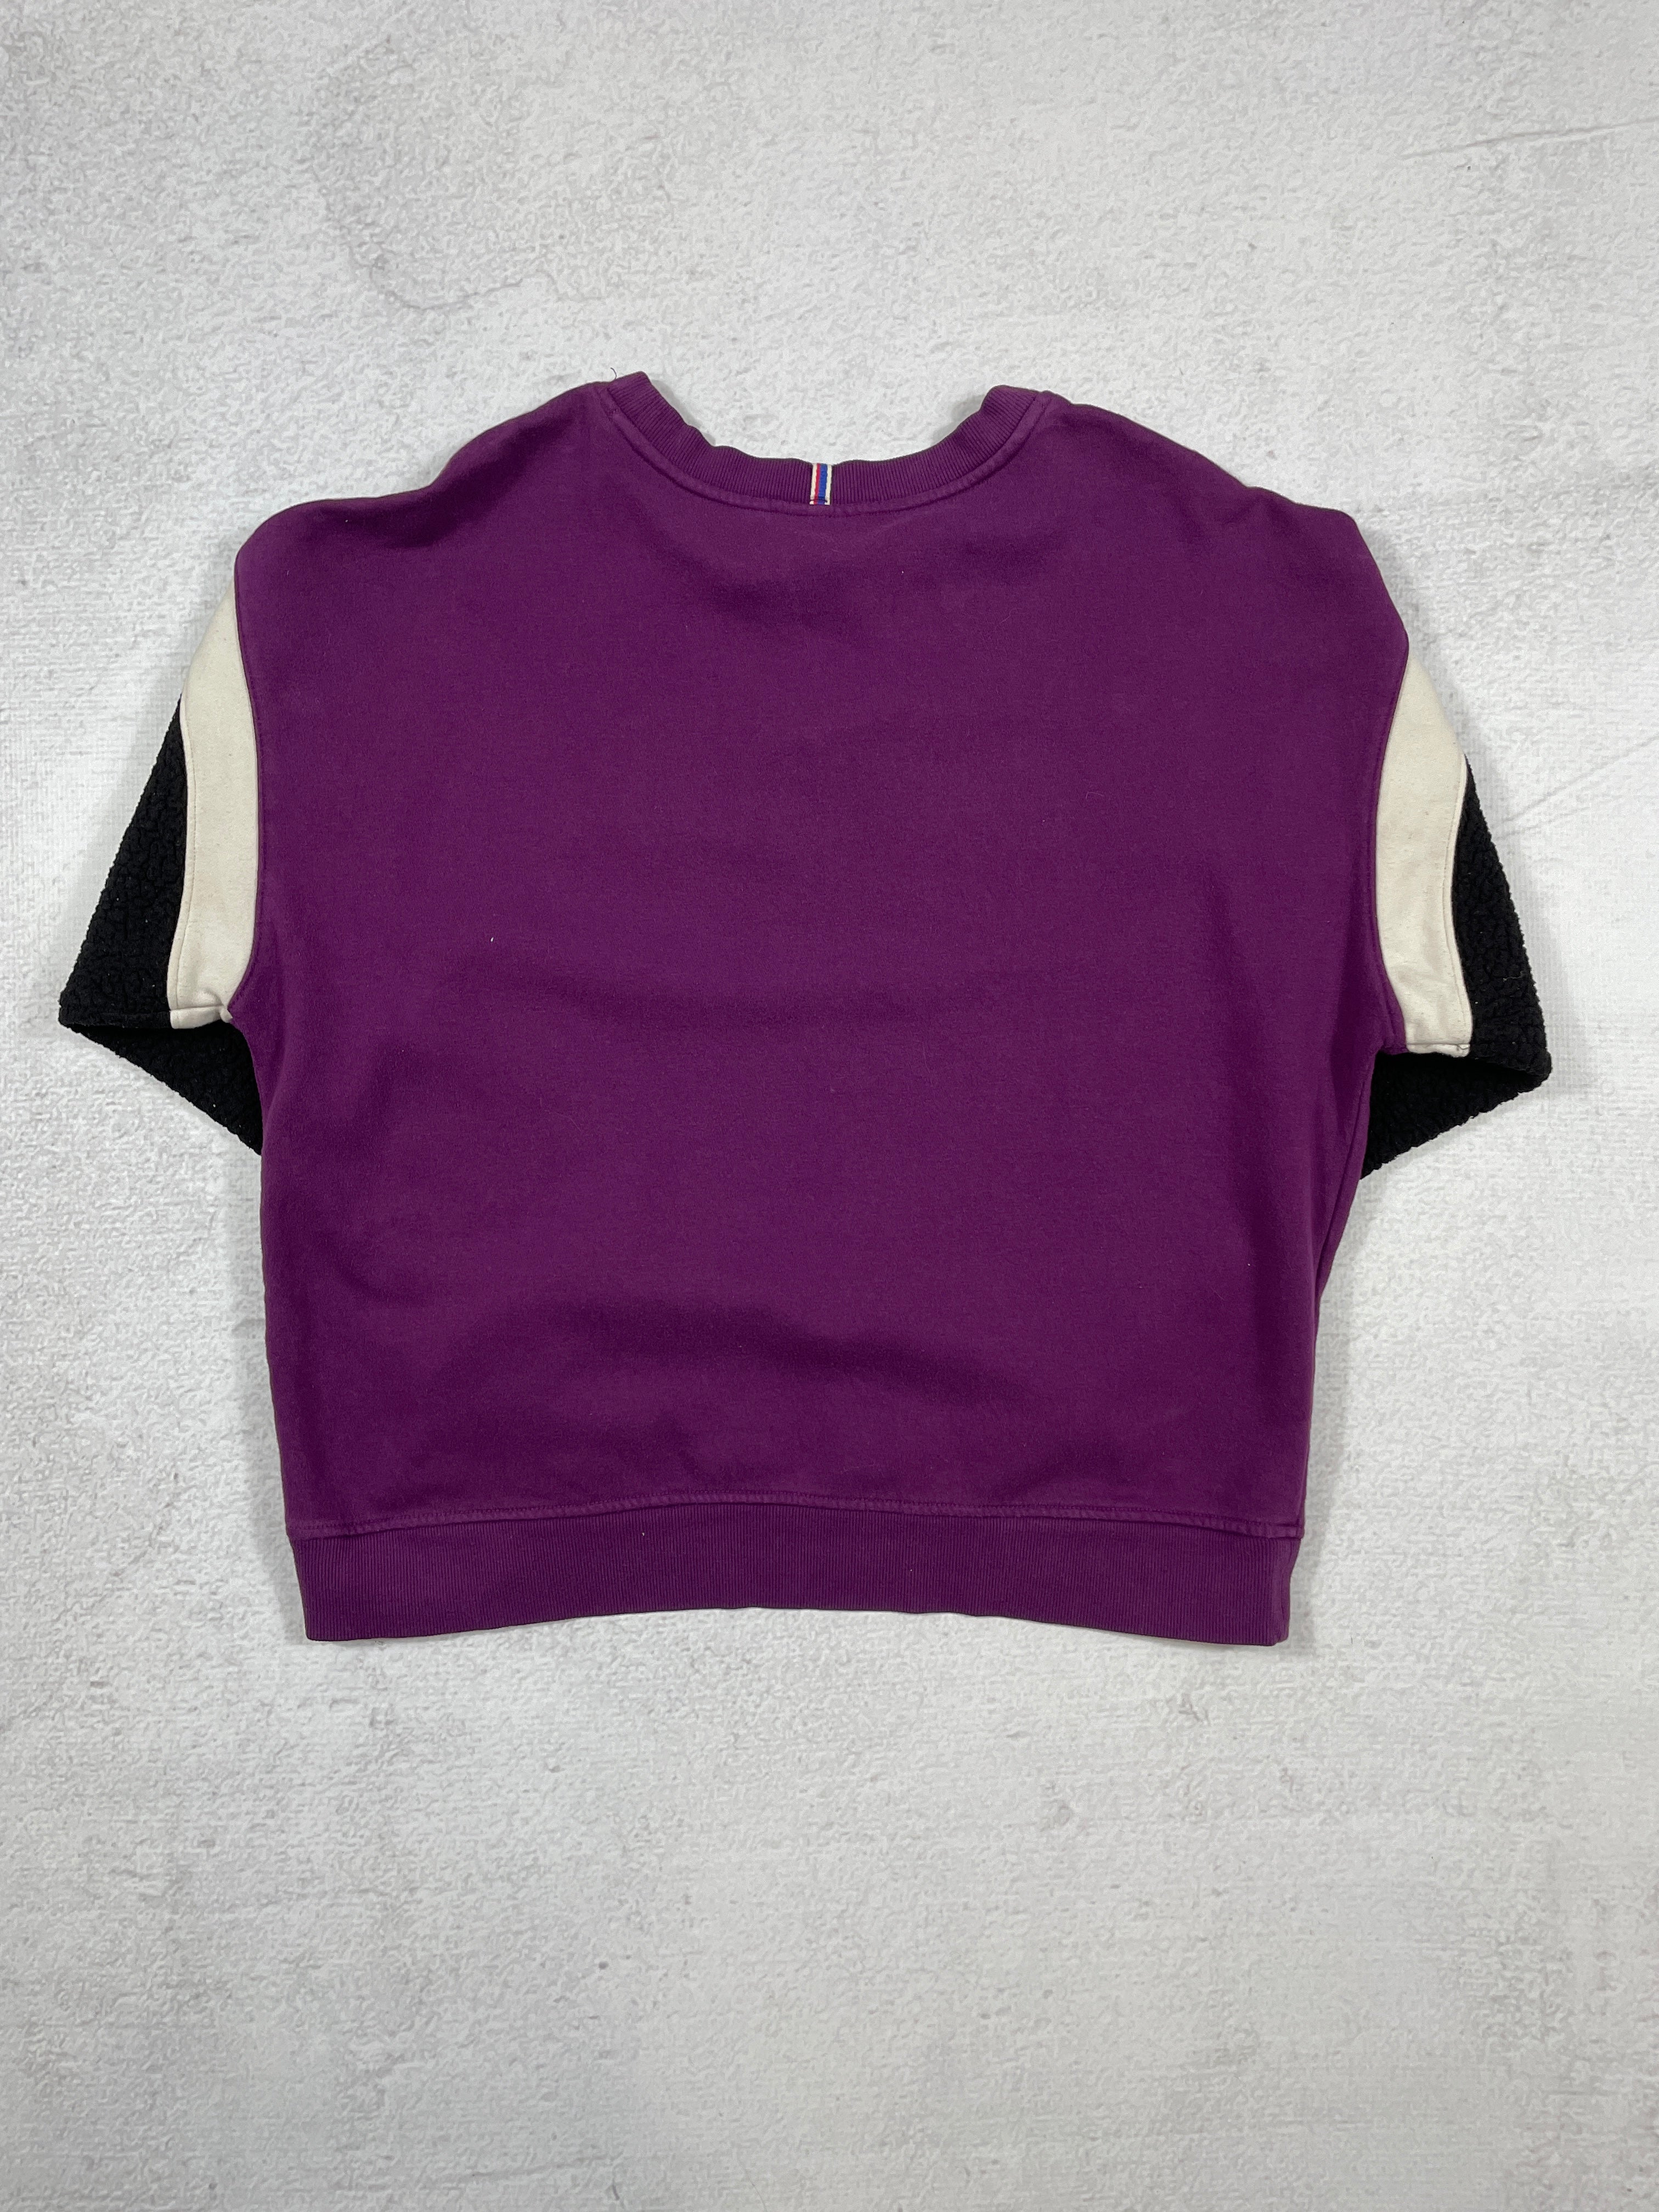 Vintage Champion Crewneck Sweatshirt - Women's XL